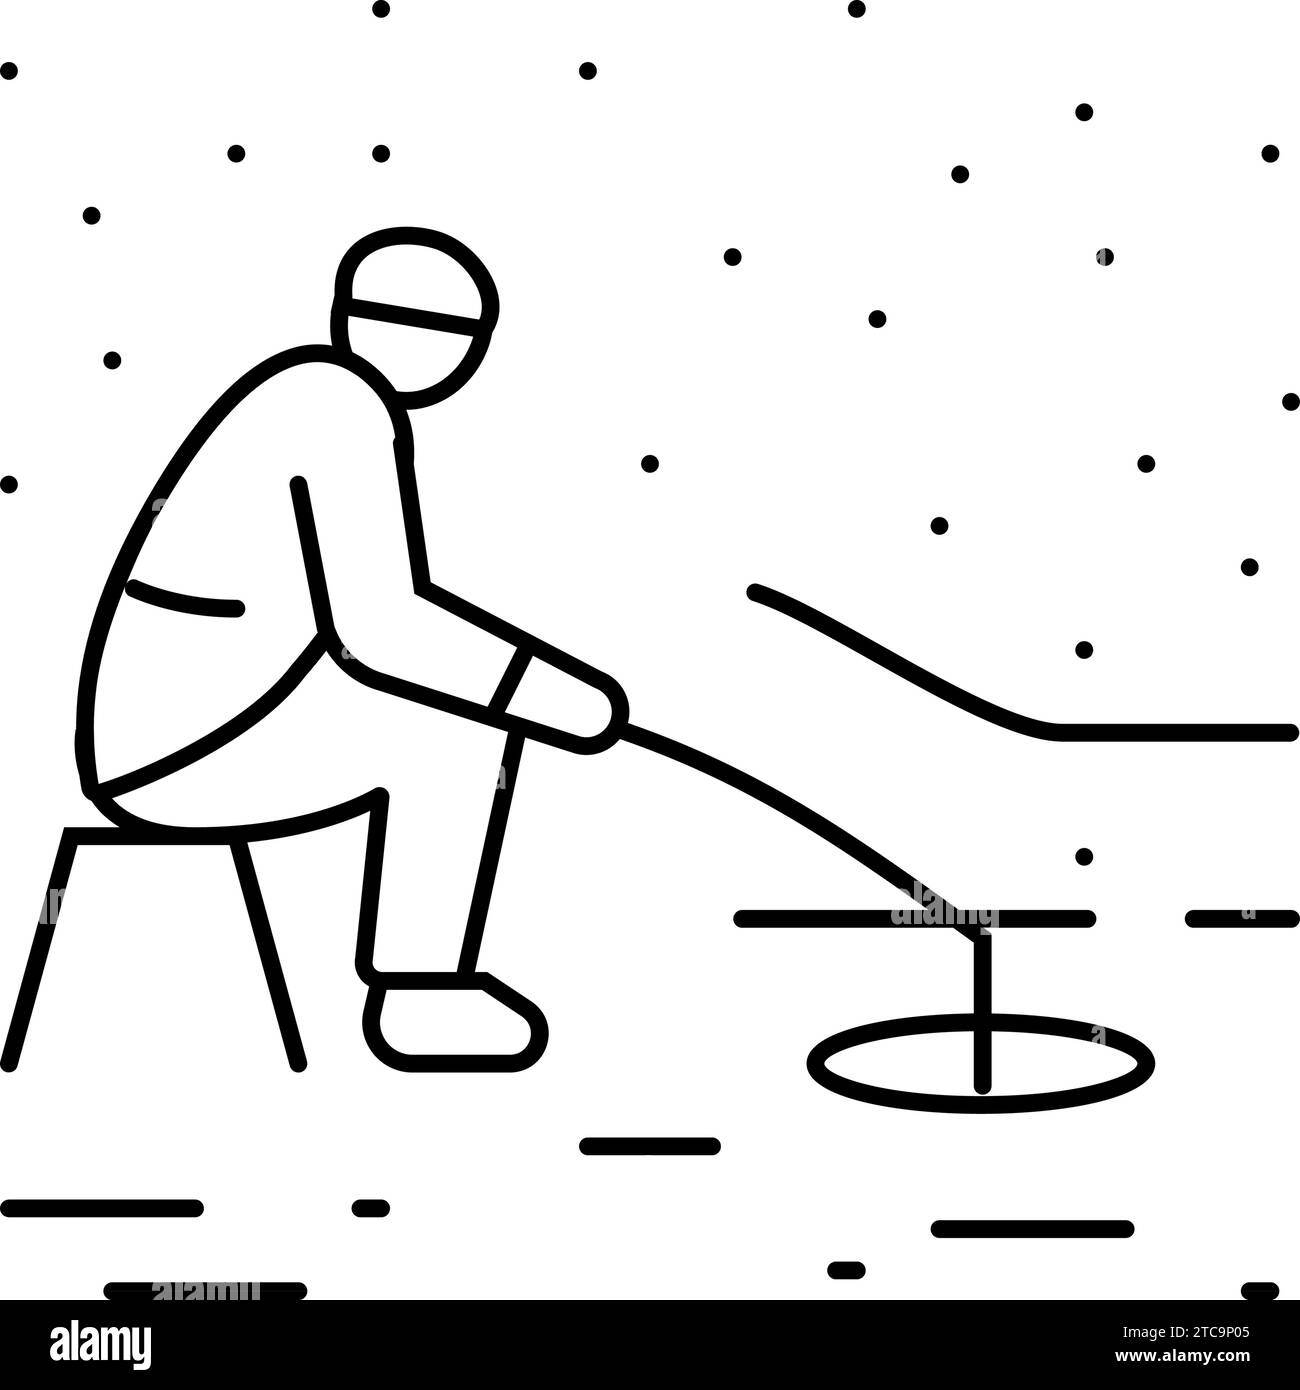 https://c8.alamy.com/comp/2TC9P05/ice-fishing-winter-season-line-icon-vector-illustration-2TC9P05.jpg